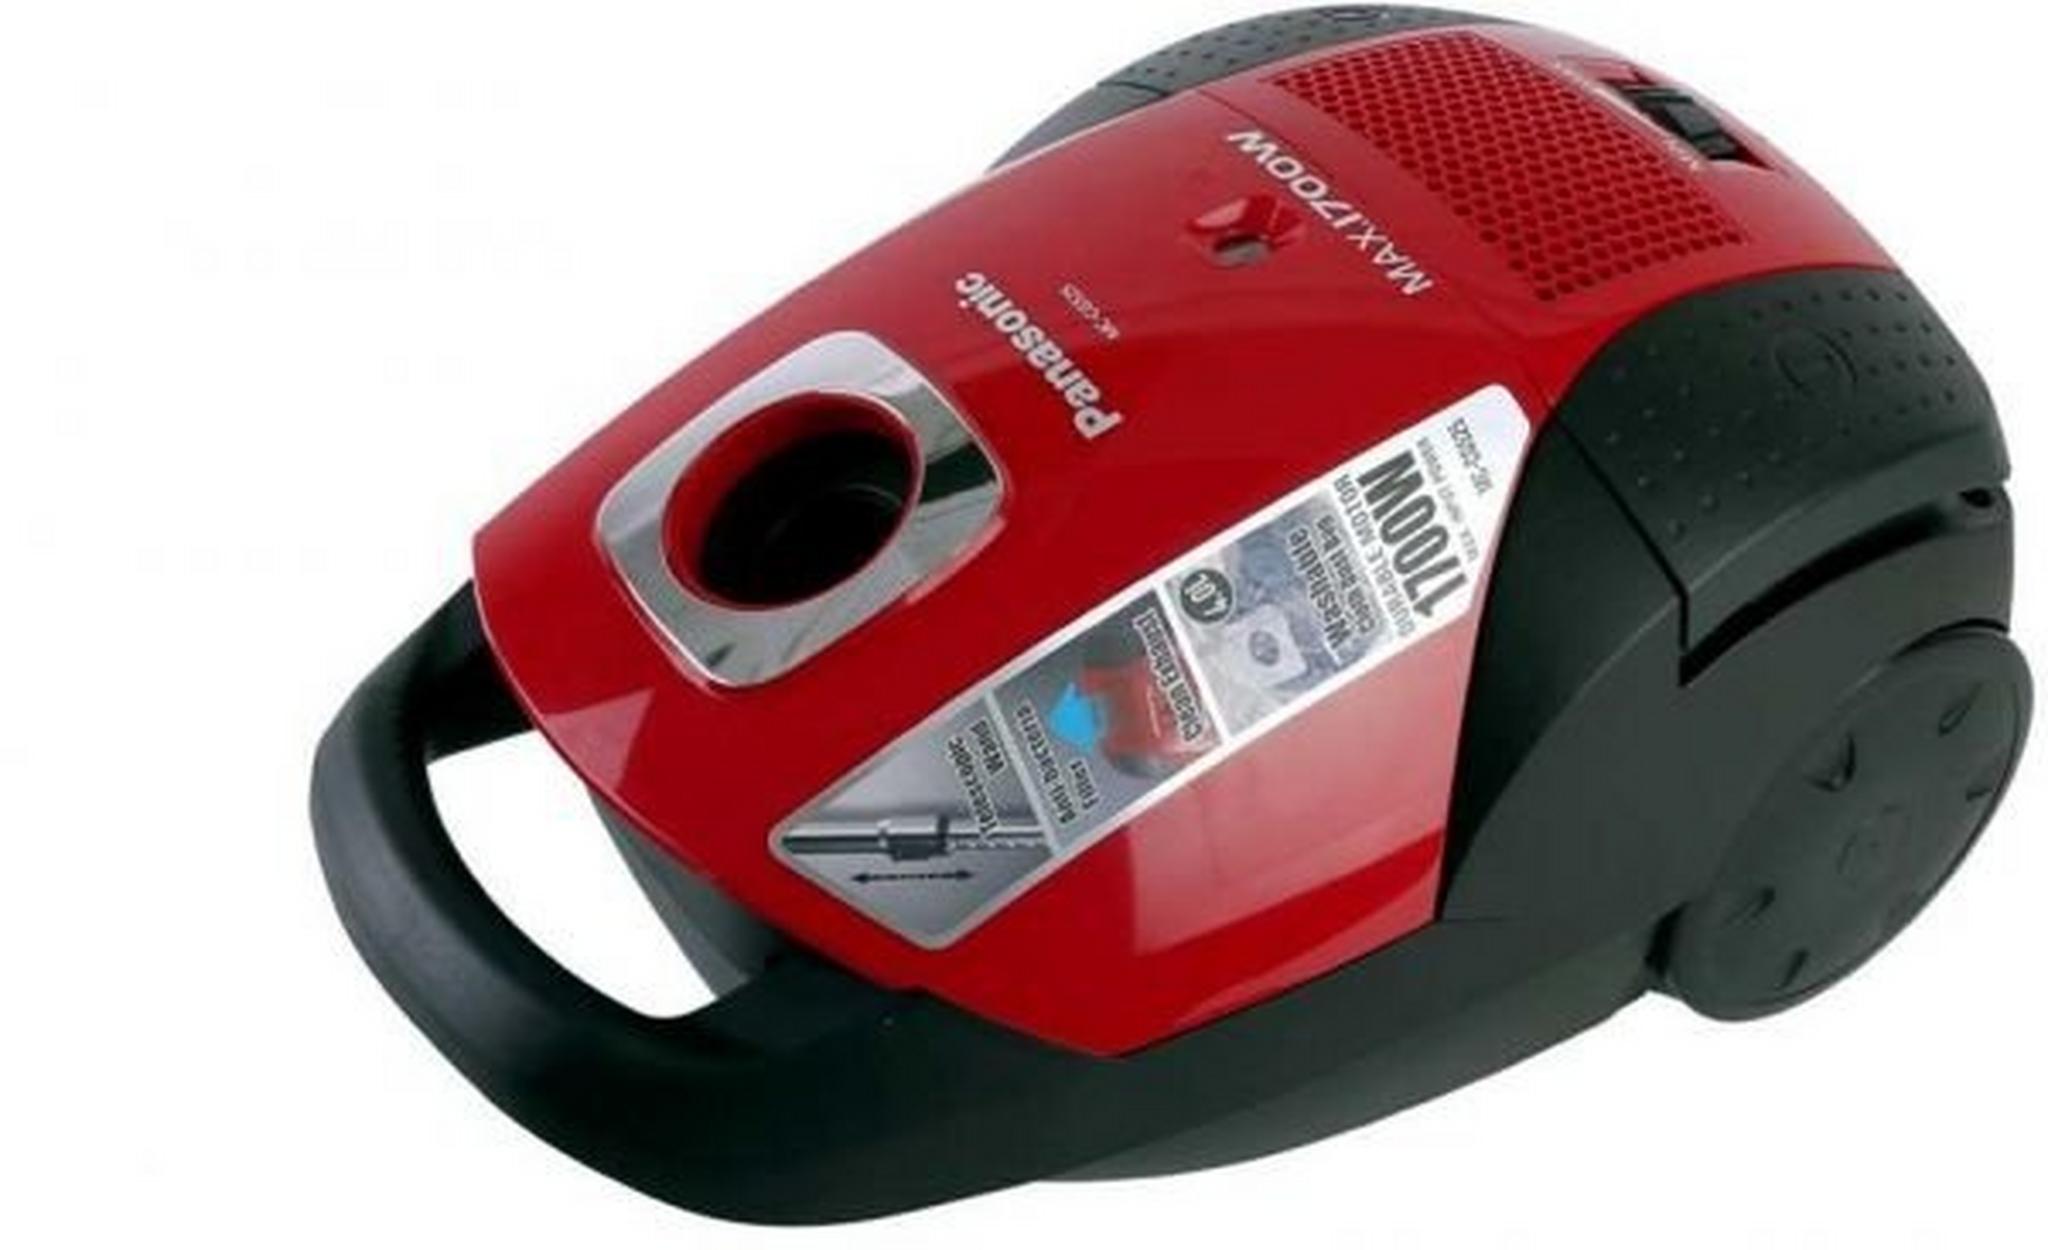 Panasonic Vacuum Cleaner, 1700W, 4 Liters, MC-CG525R - Grey/Red